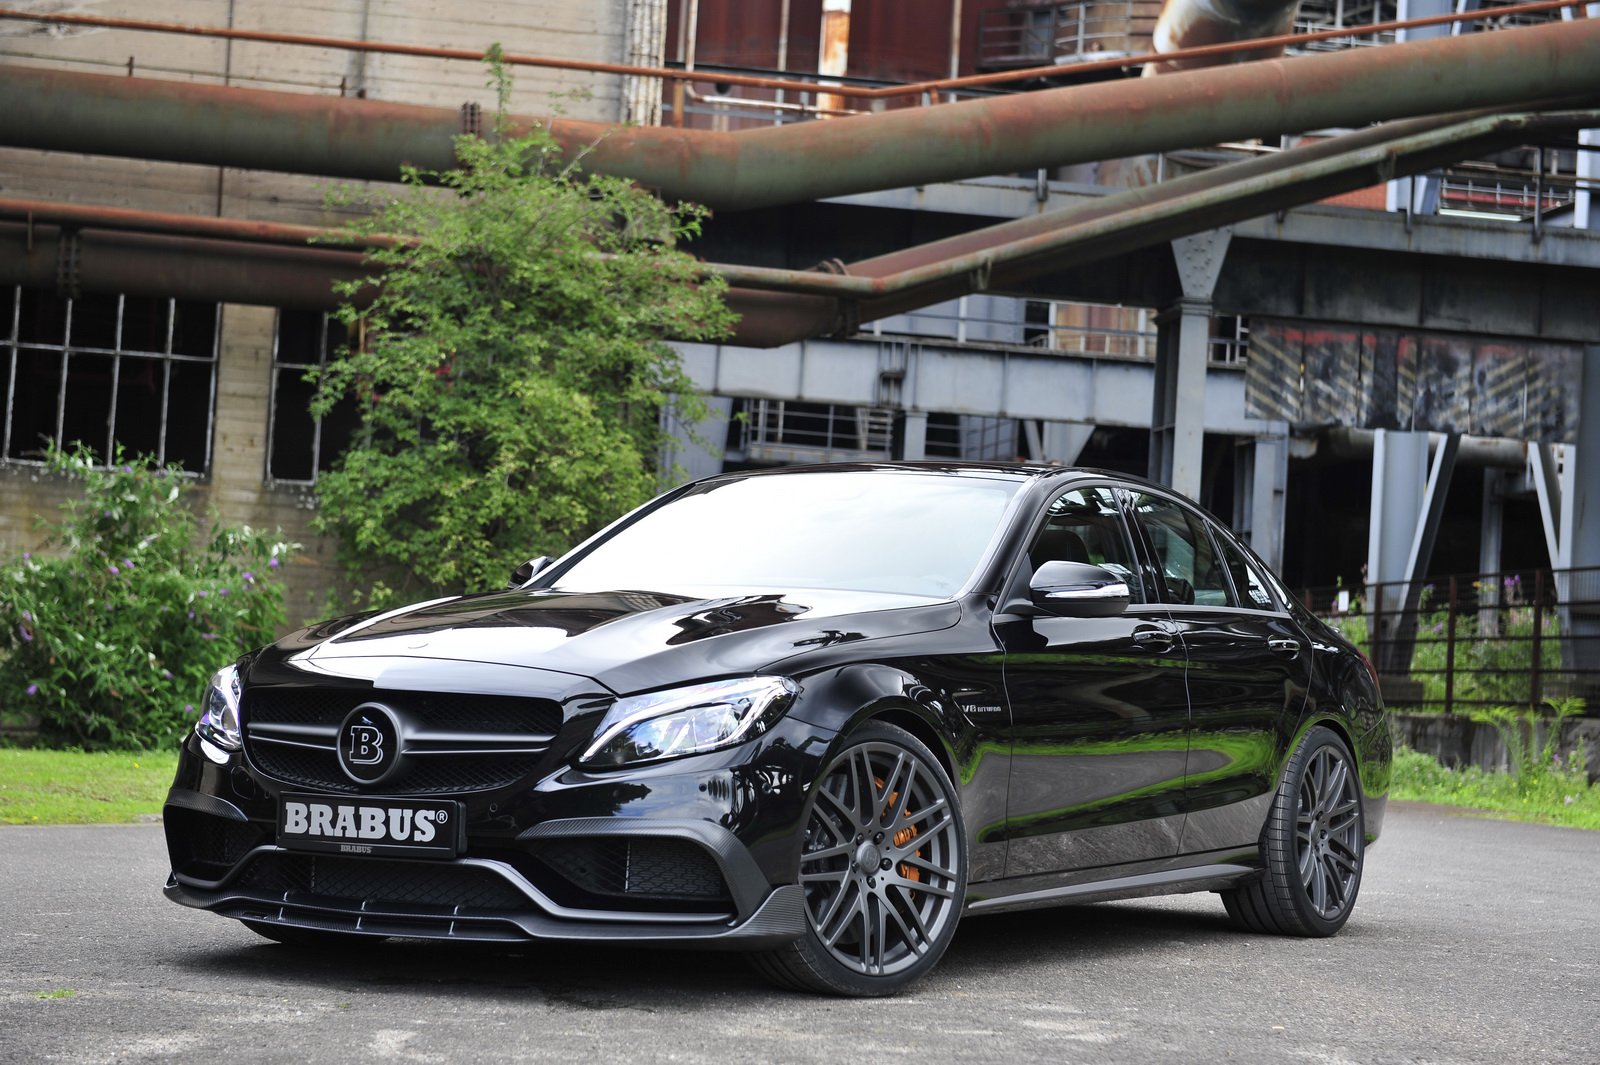 brabus, 2015, Mercedes, Amg, C63 s, Cars, Modified Wallpaper